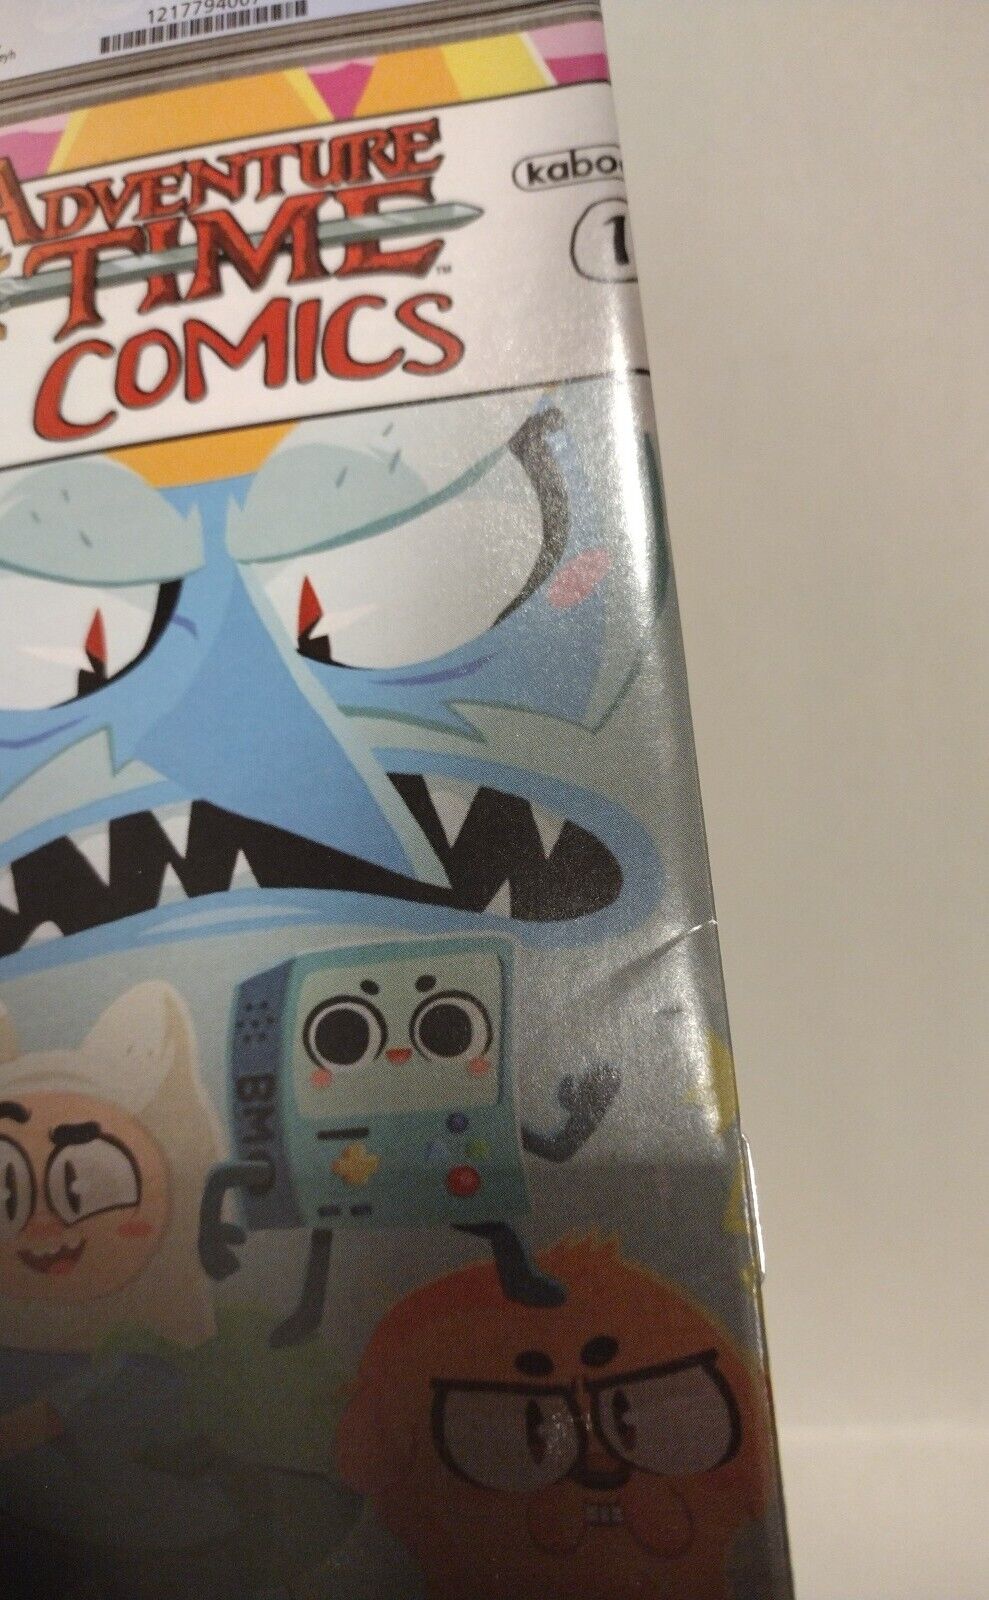 Adventure Time 75 (2018) Boom Studios Comic APTWE Retailer Variant Last Issue FN